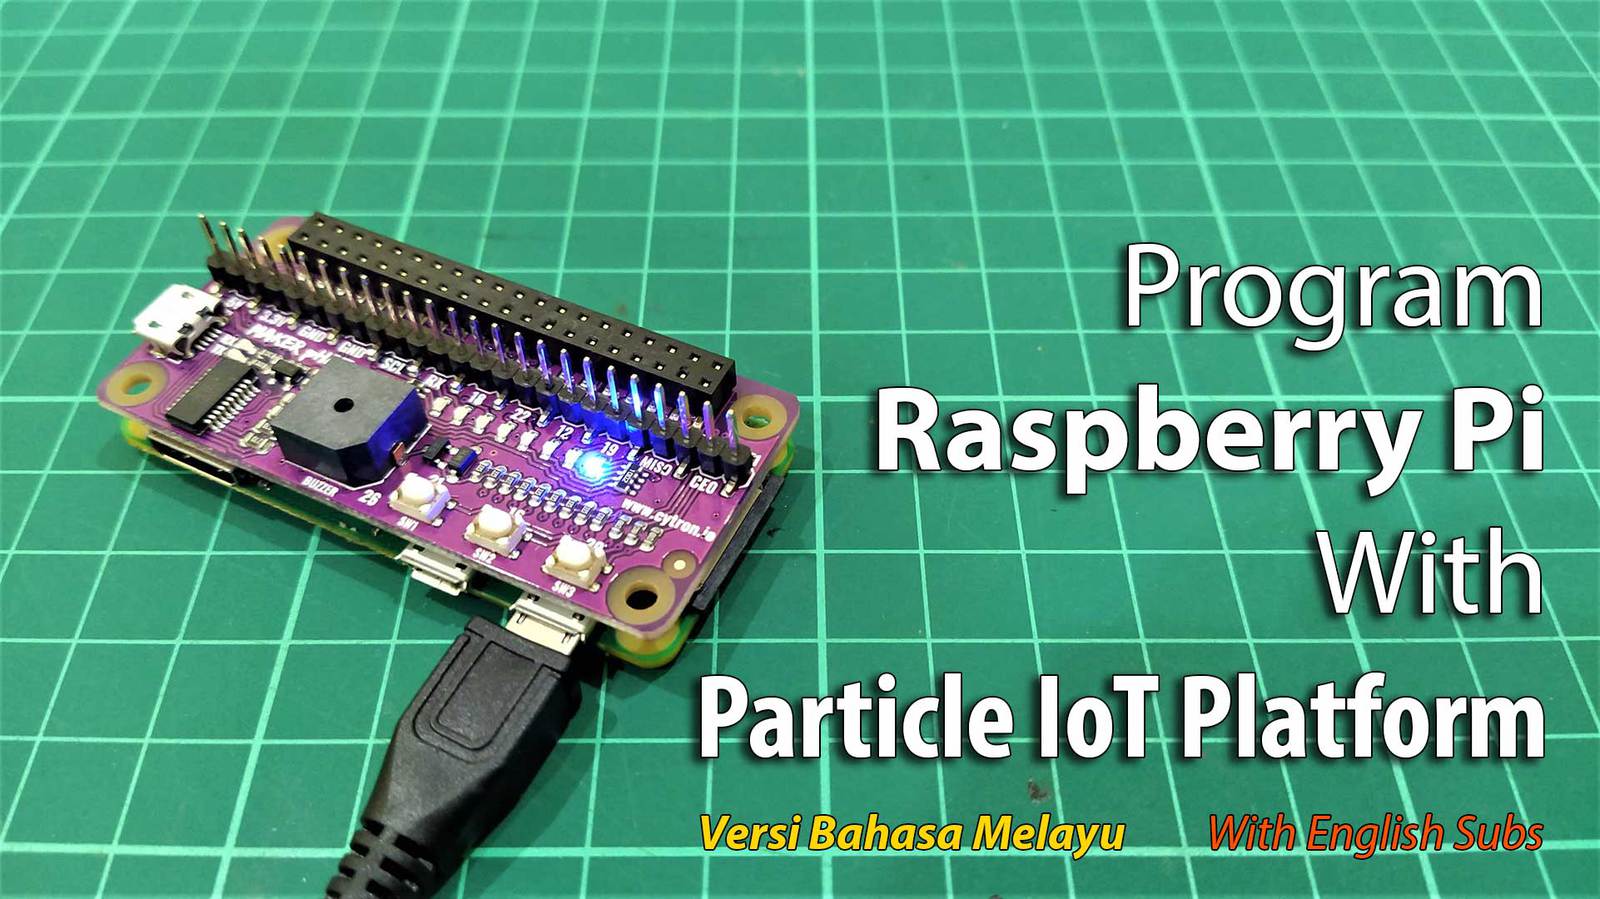 Program Raspberry Pi With Particle IoT Platform